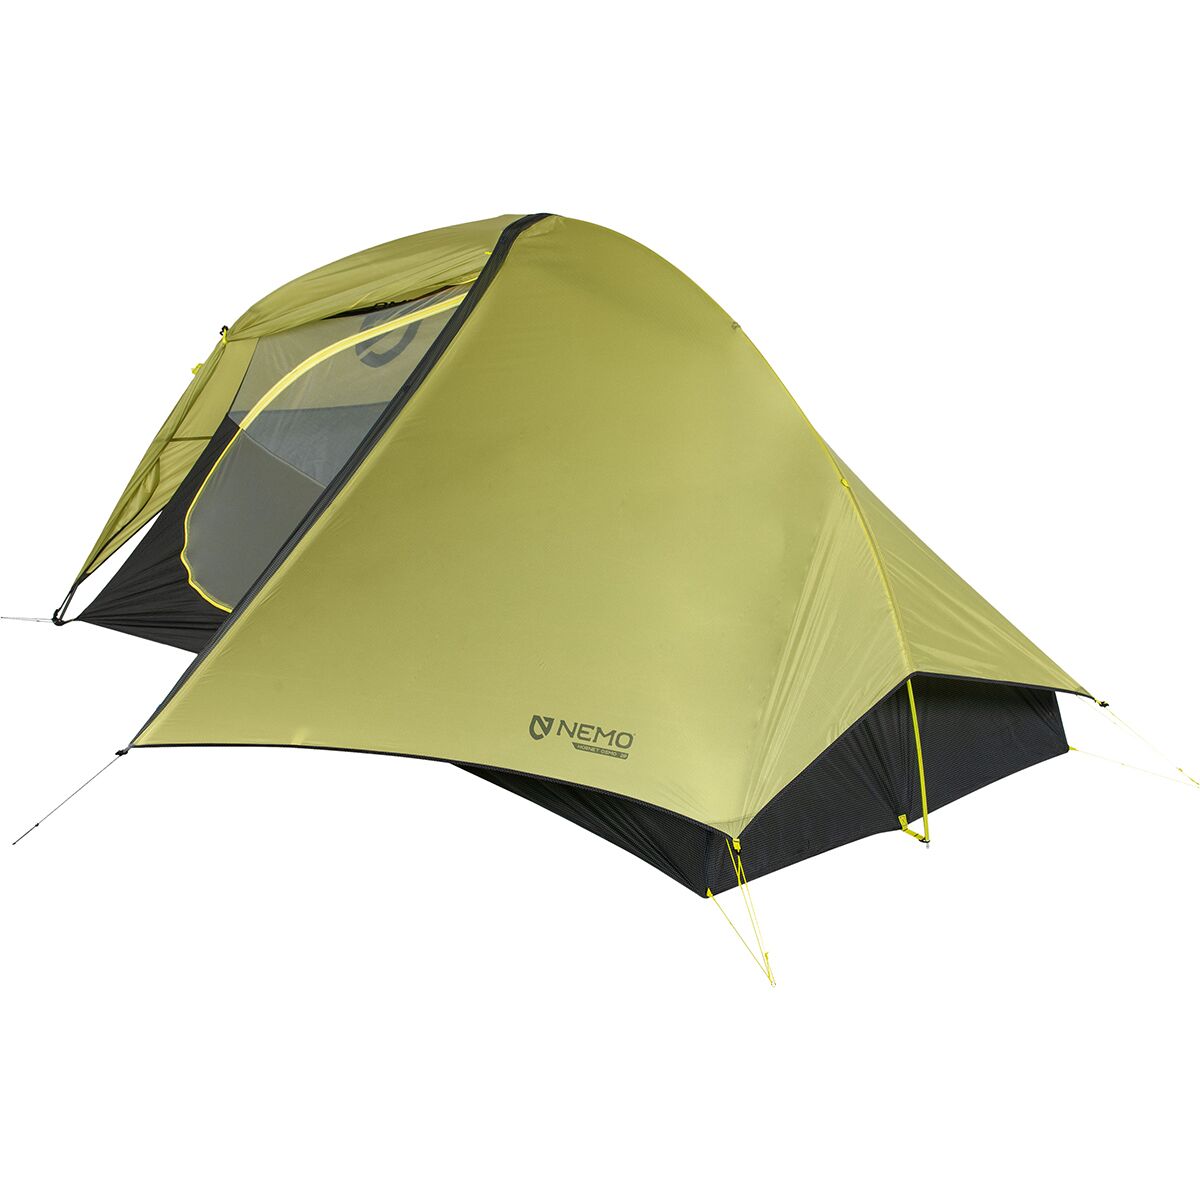 NEMO Equipment Inc. Hornet OSMO Tent: 2-Person 3-Season